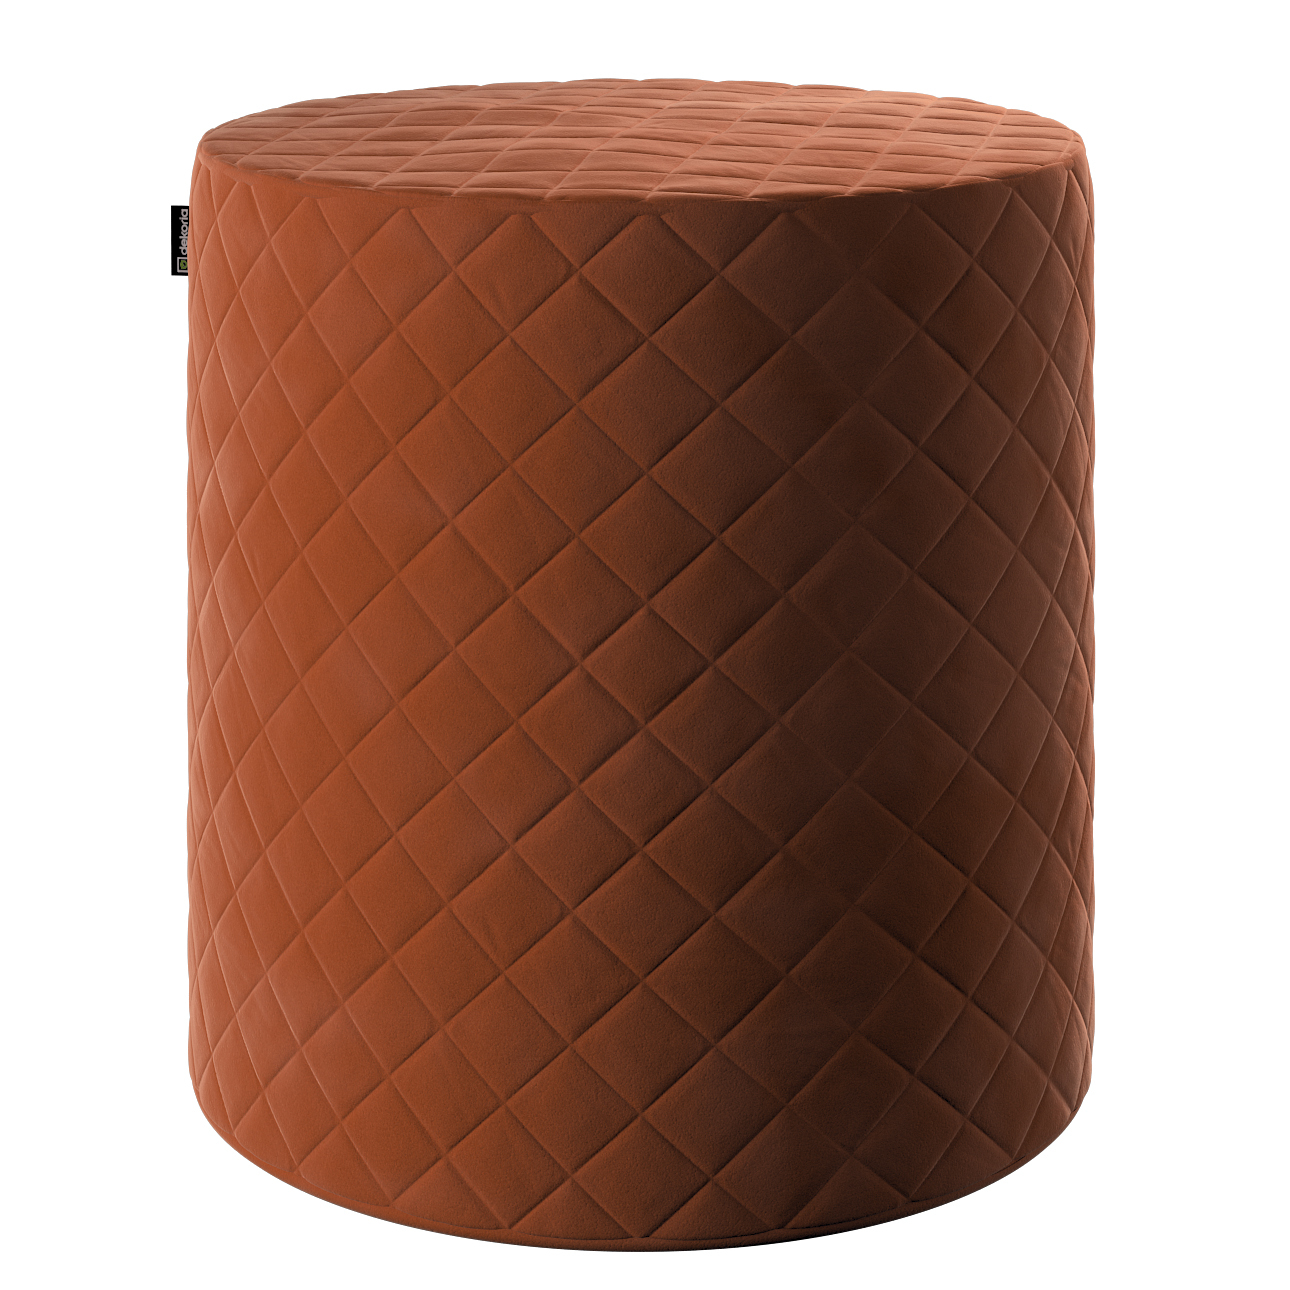 Pouf Barrel gesteppt, braun-karamell, ø 40 x 40 cm, Velvet (704-33) günstig online kaufen